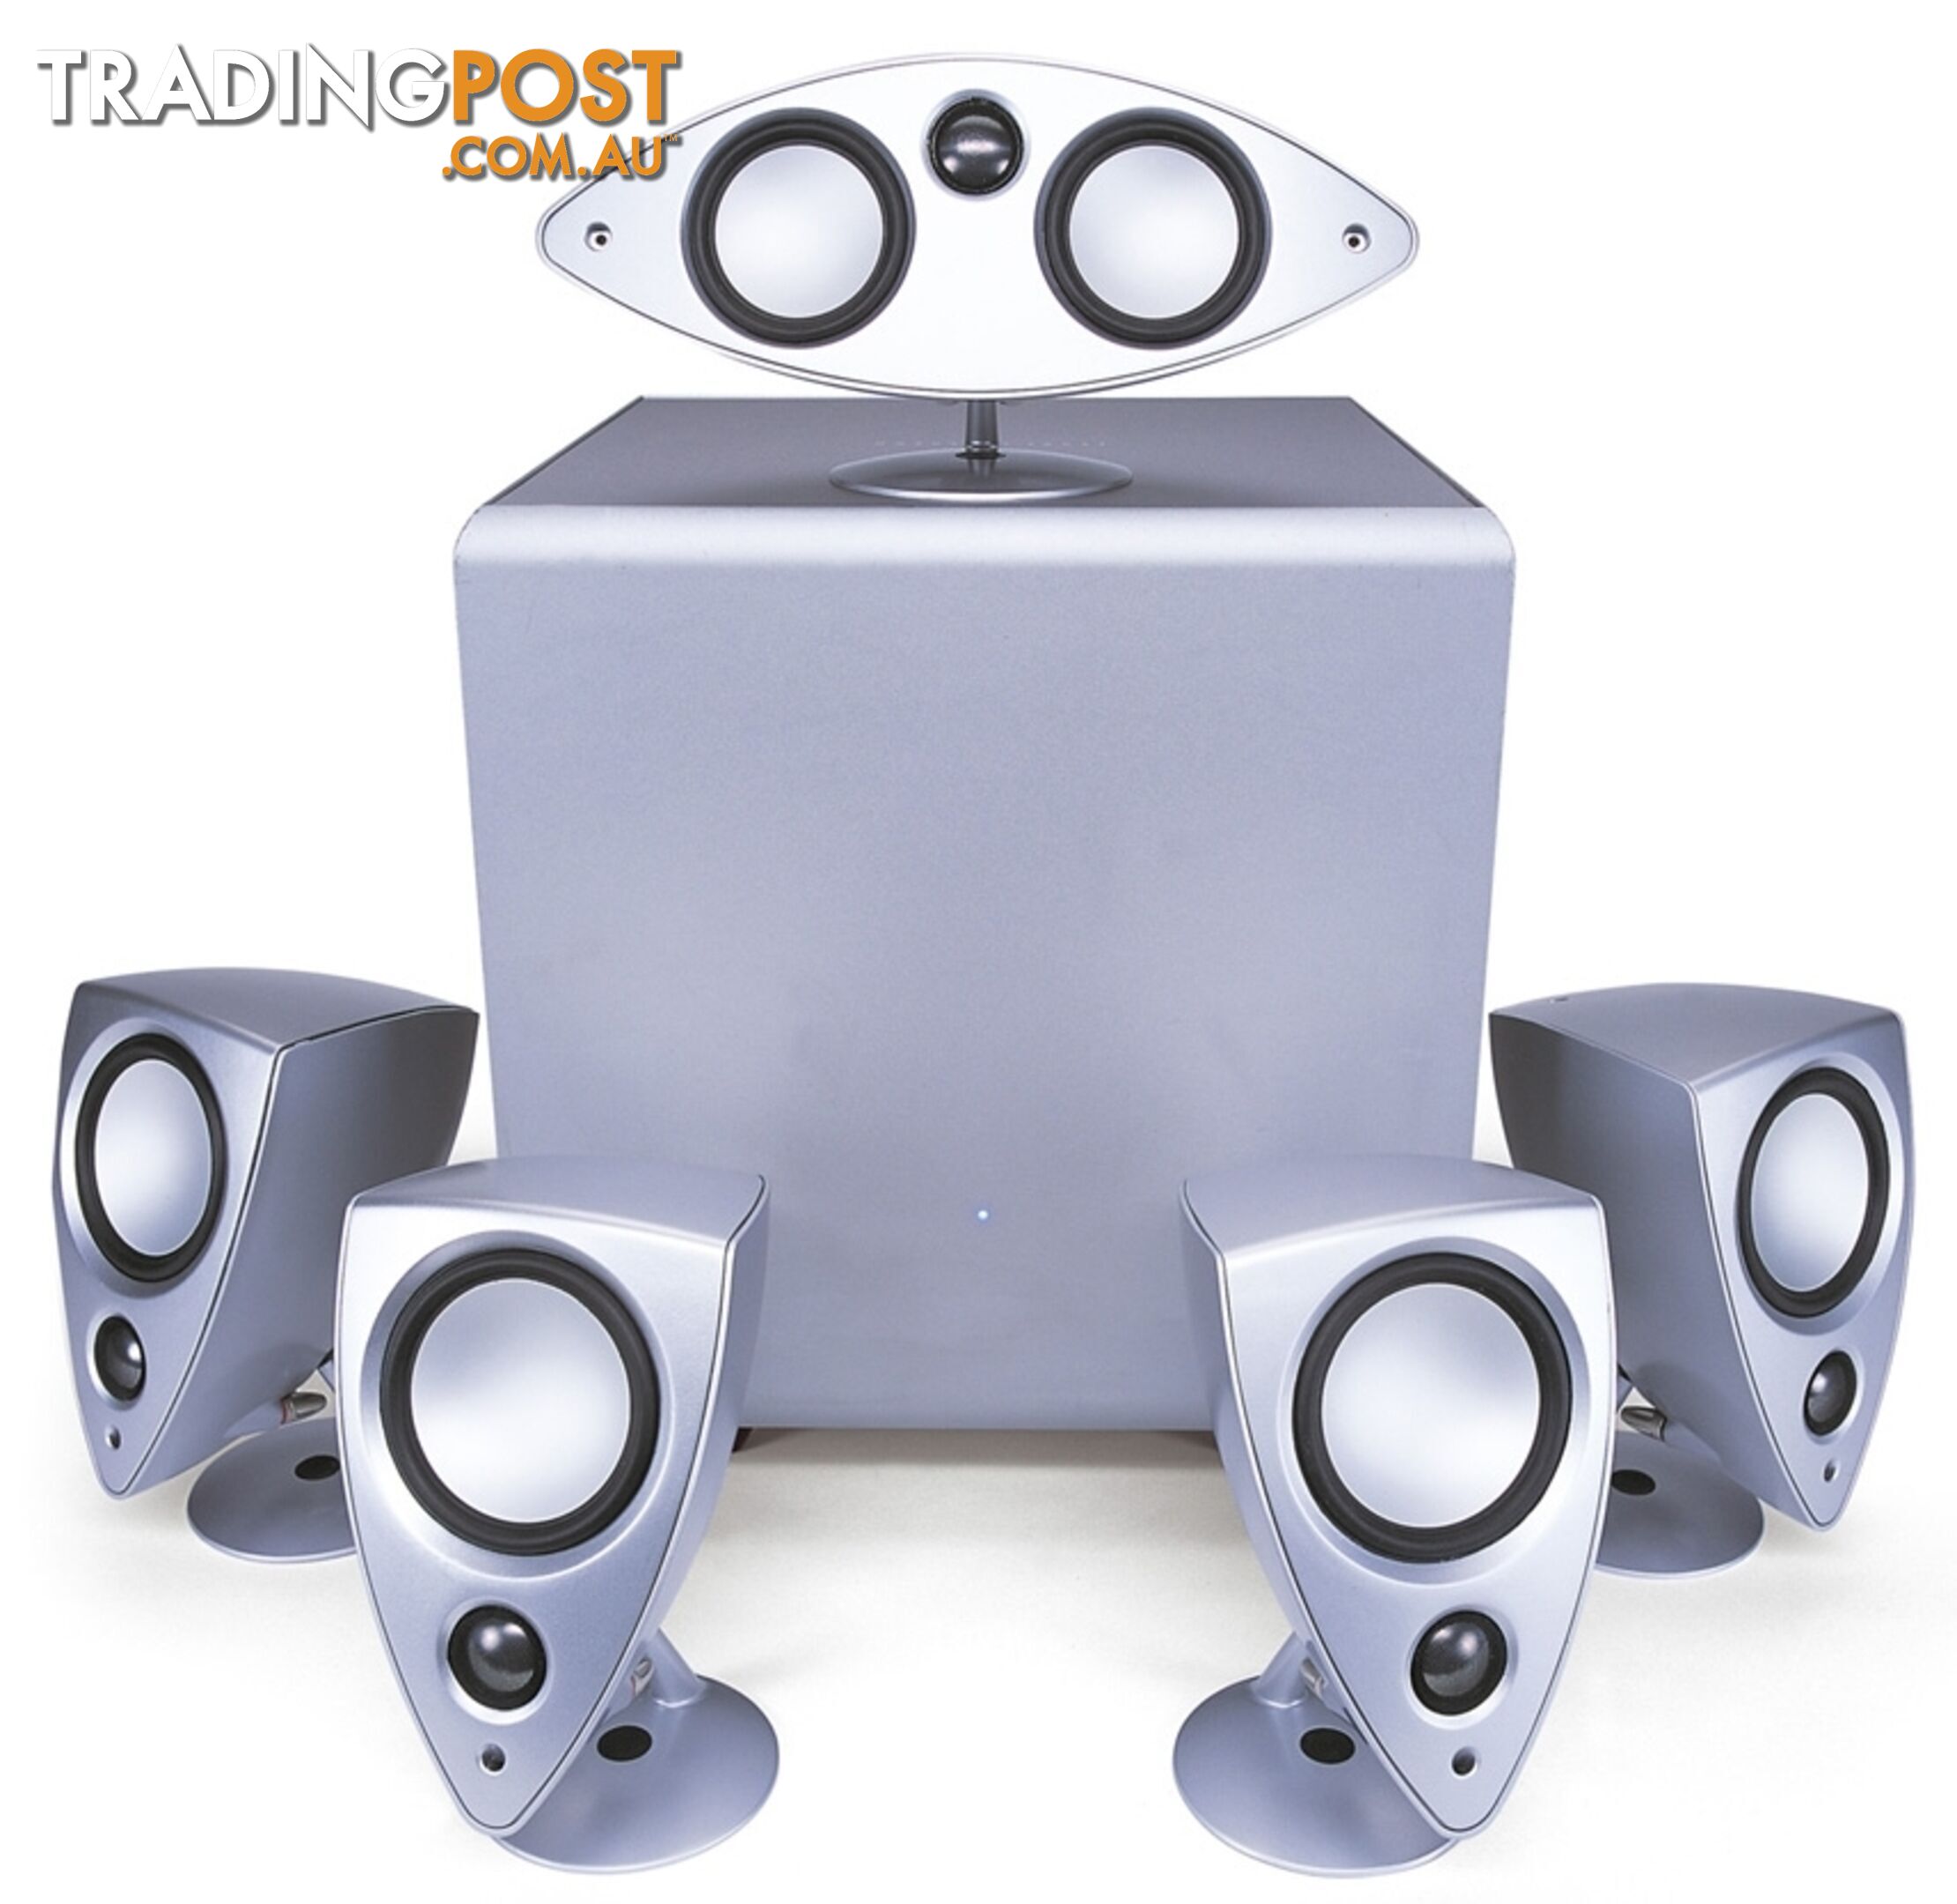 Mordaunt Short Genie 5.1 speaker system